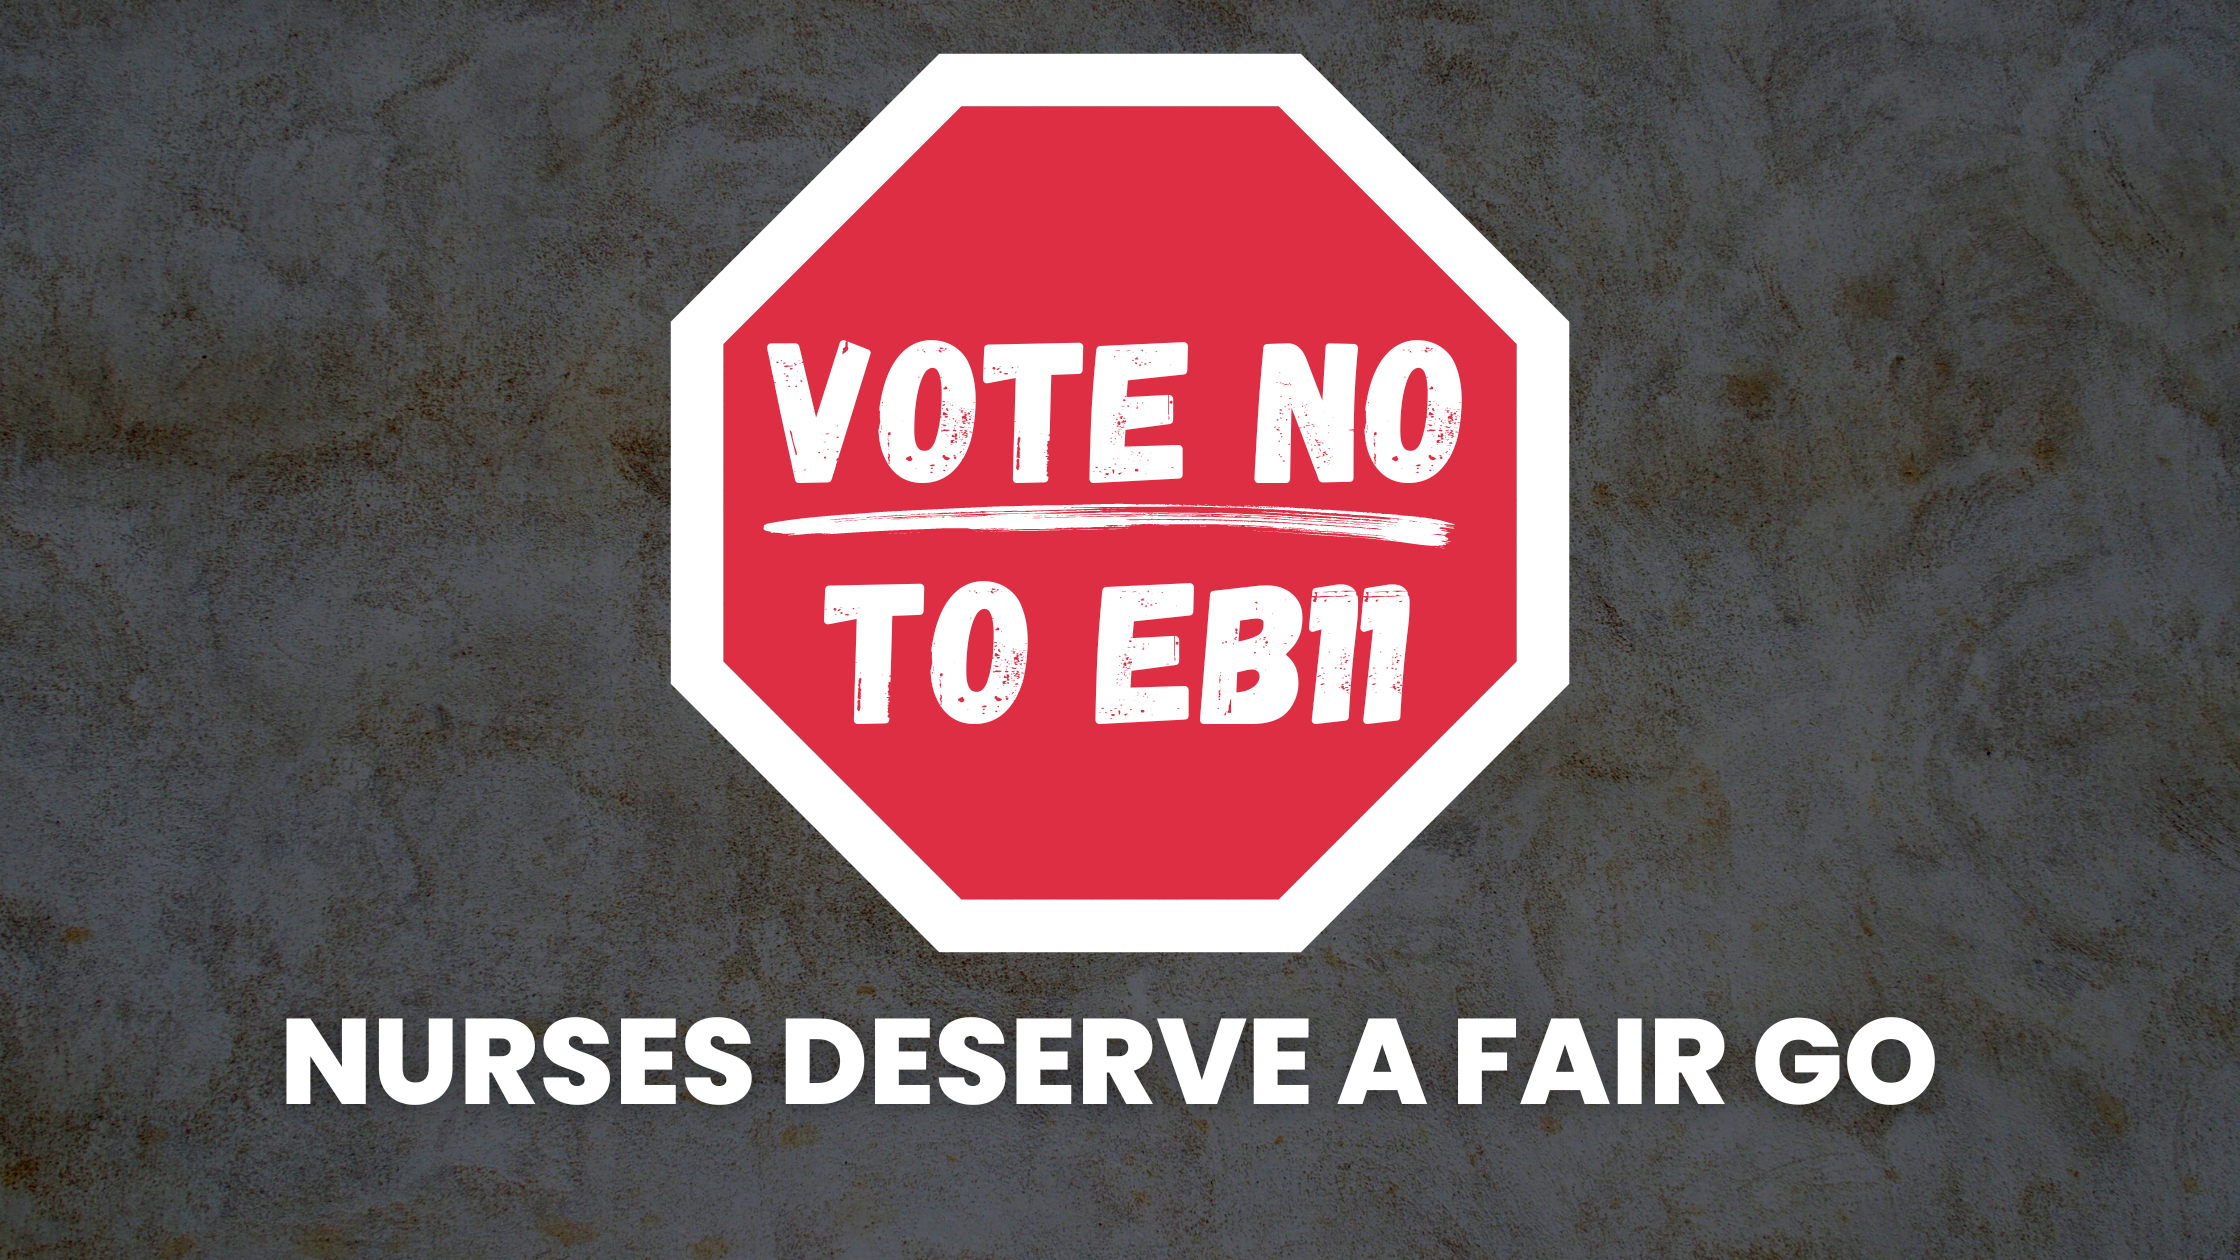 VOTE NO TO EB 11 (Blog Banner)